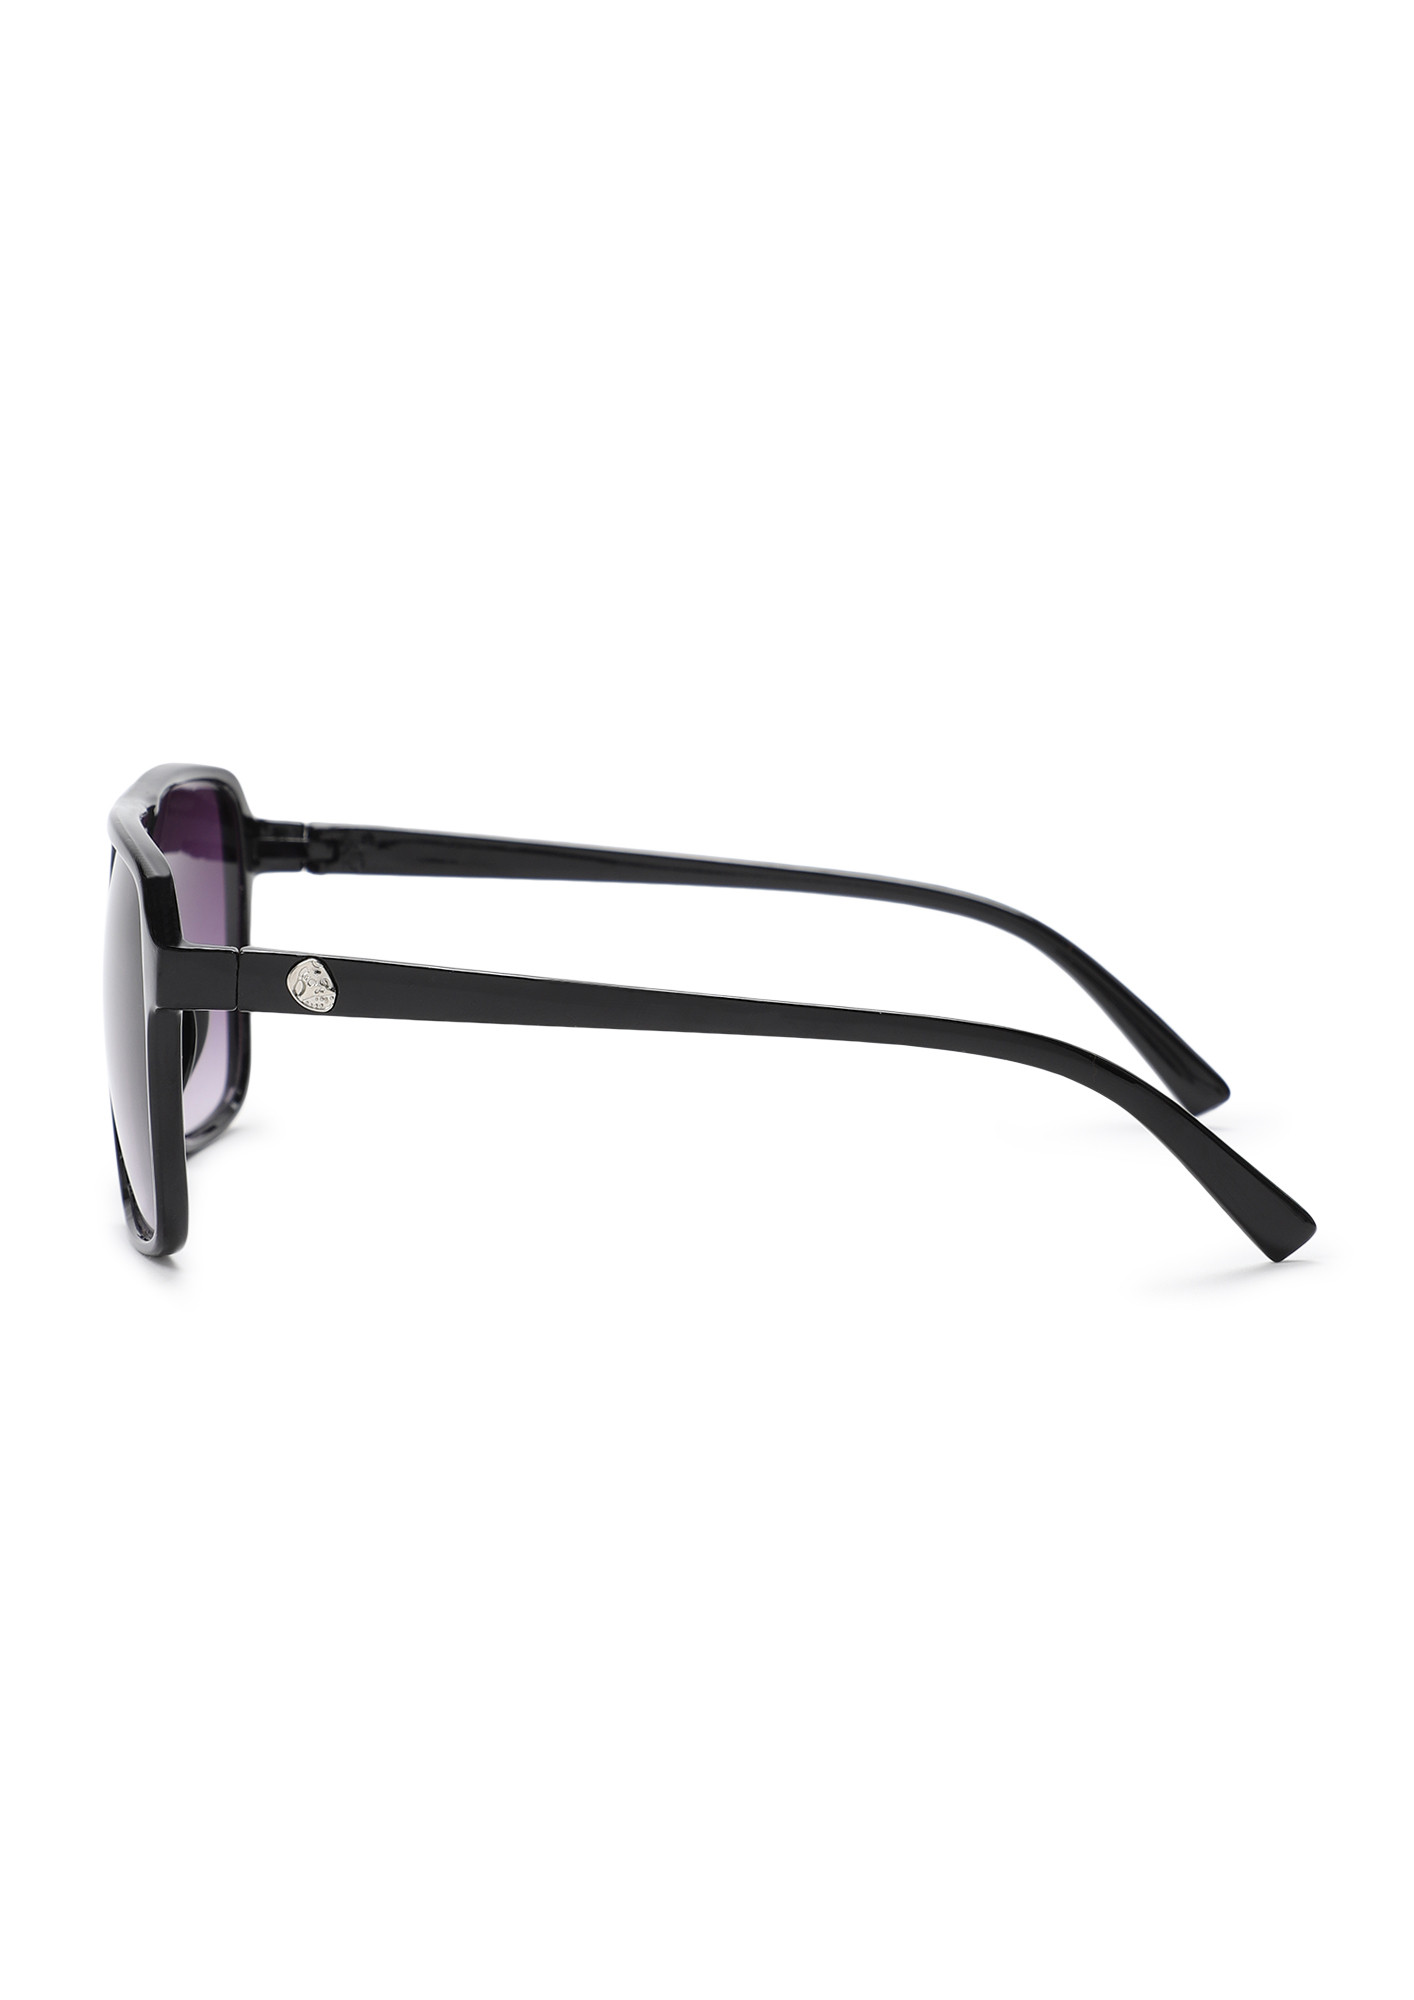 Shop Flex Frames Rectangle Sunglasses For Boys Online